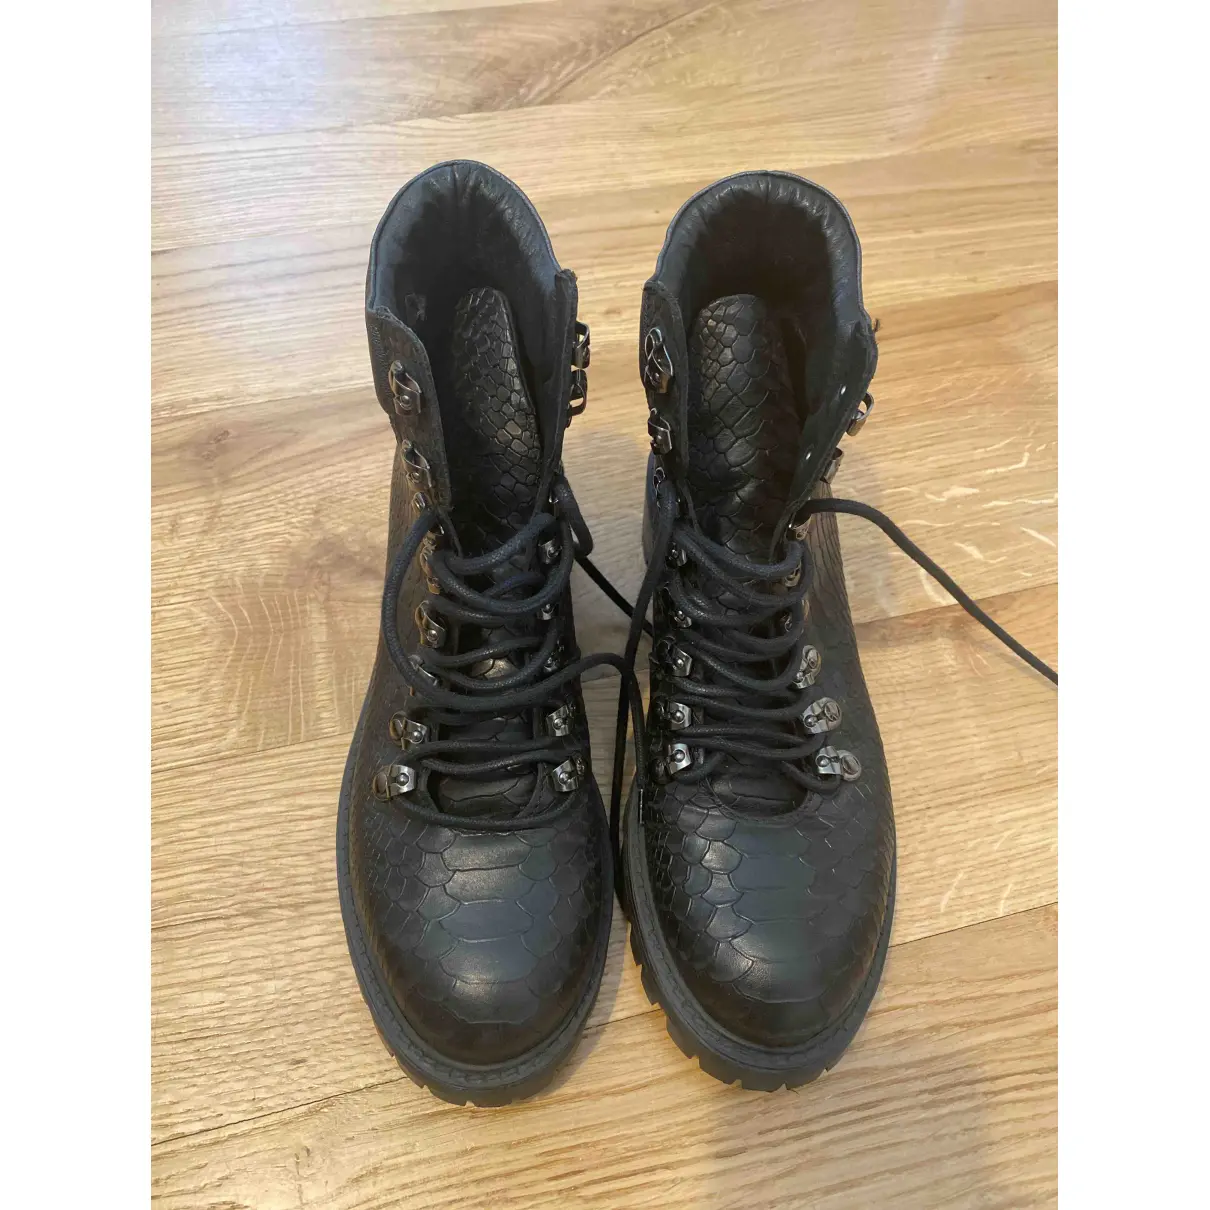 Buy Stokton Leather biker boots online